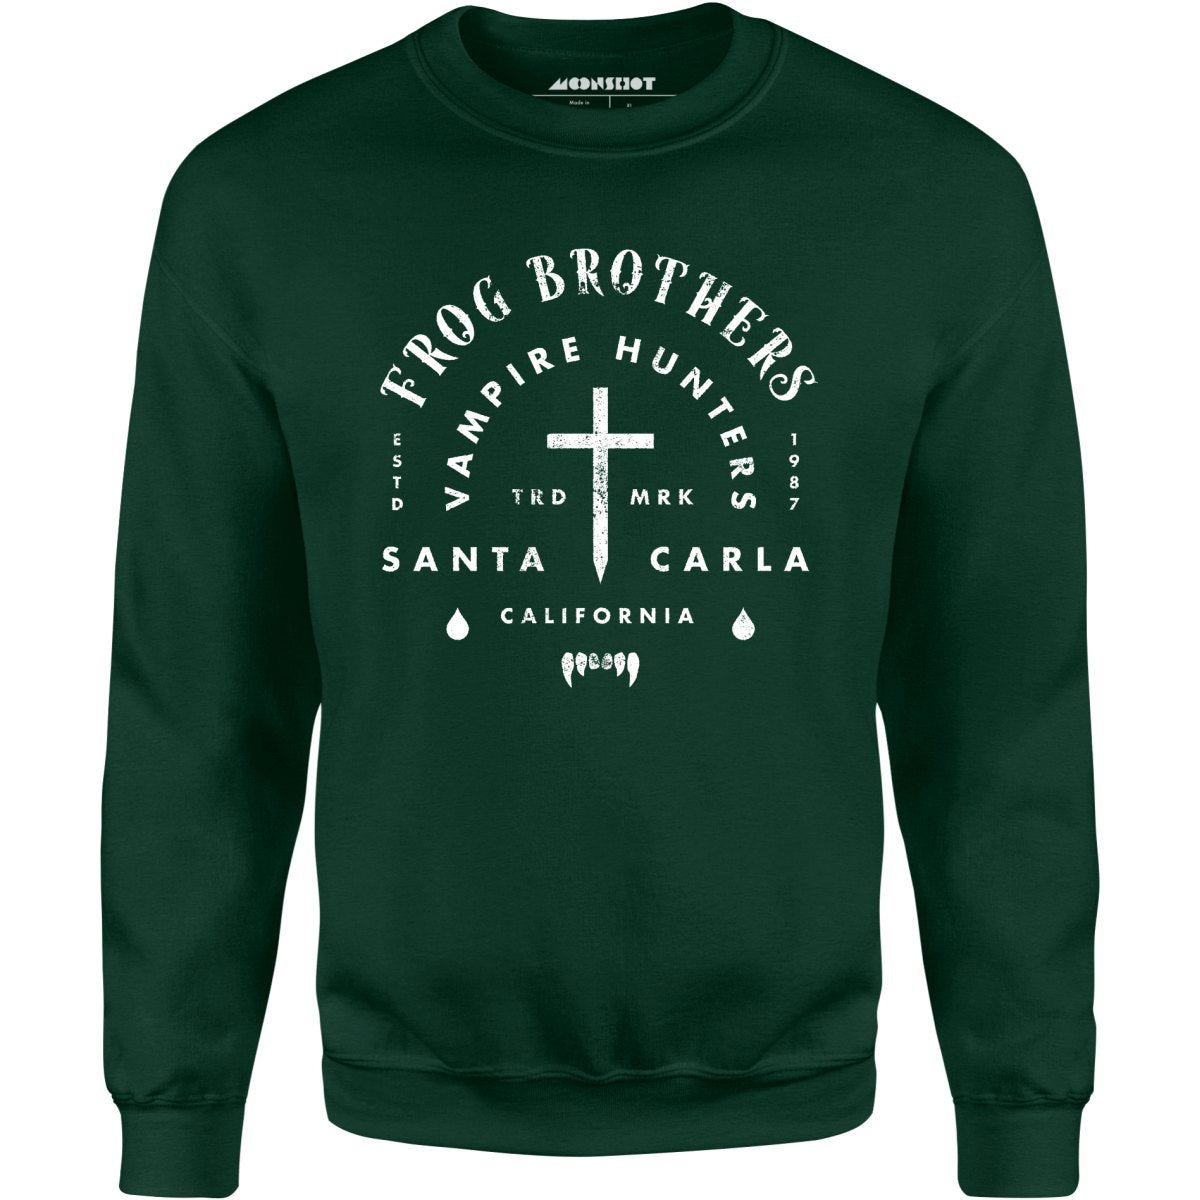 Frog Brothers Vampire Hunters - Unisex Sweatshirt